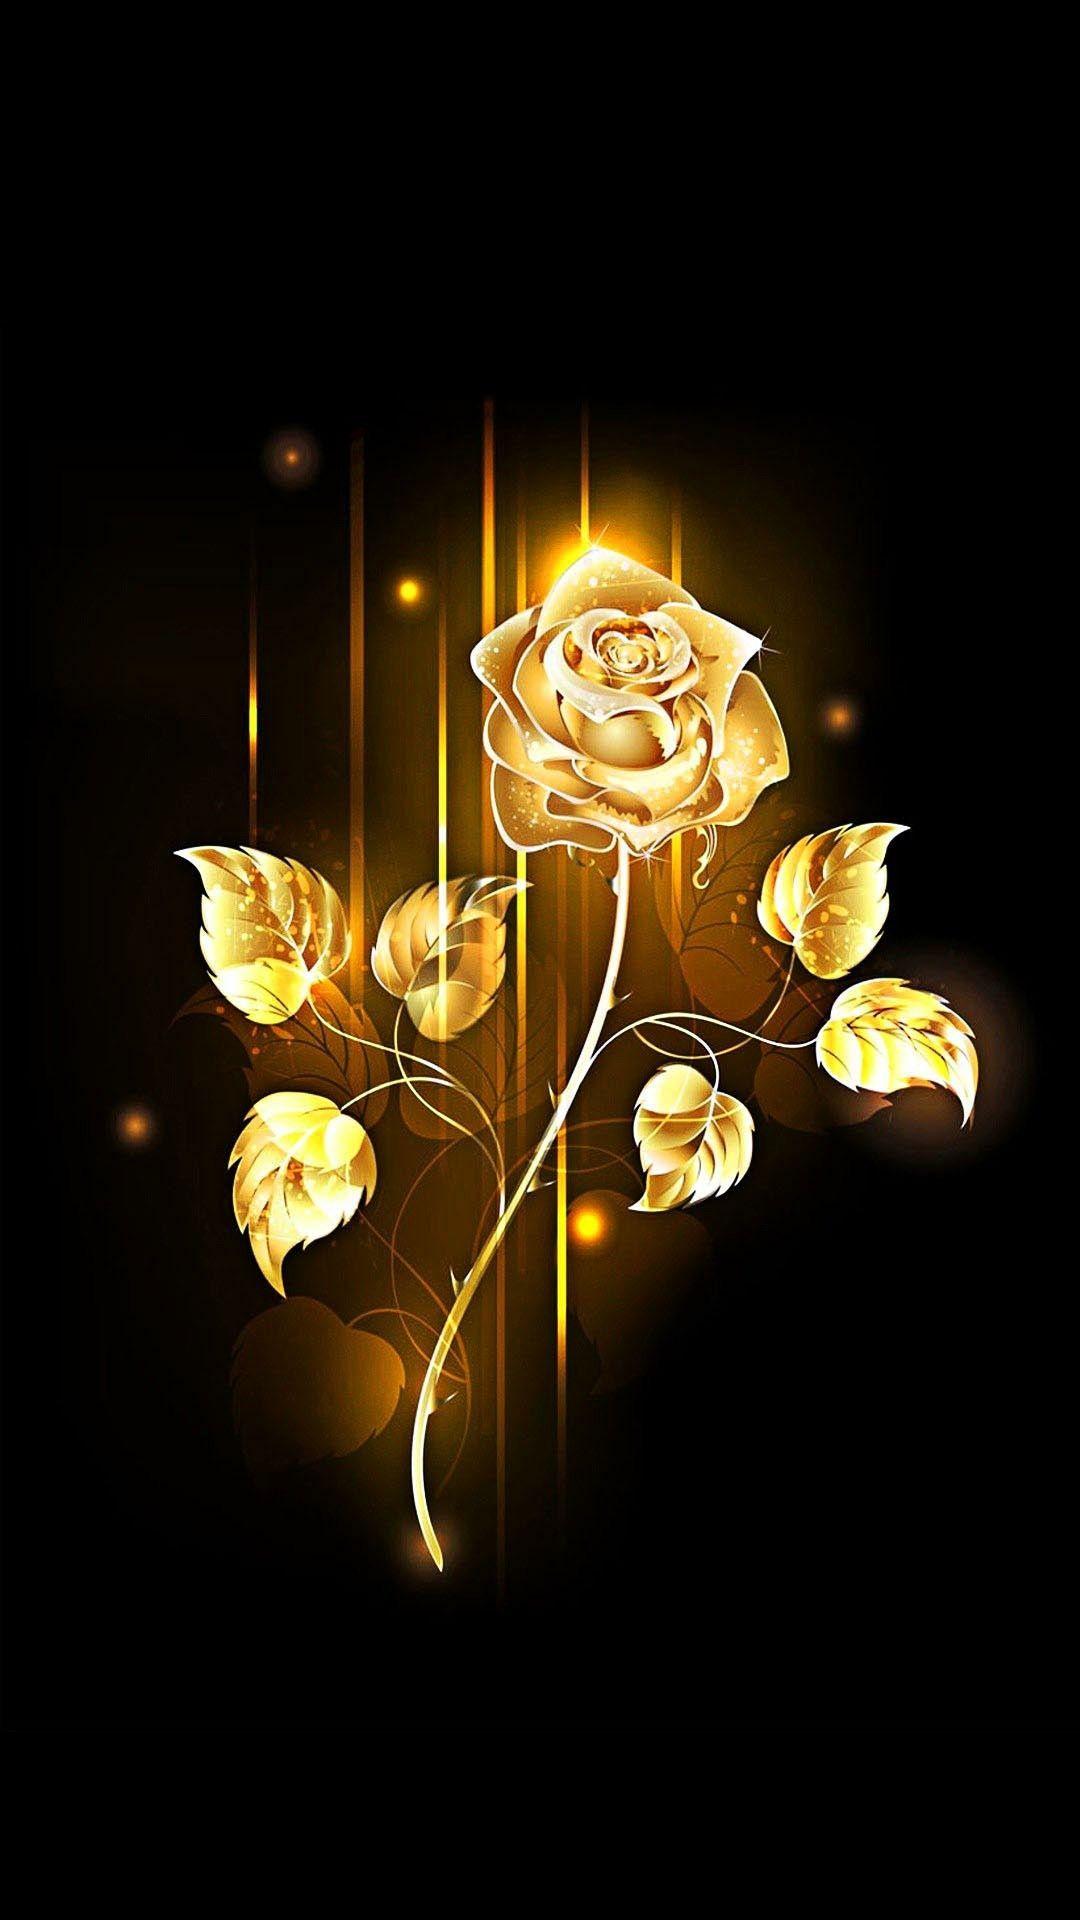 Golden Rose Wallpapers Top Free Golden Rose Backgrounds WallpaperAccess